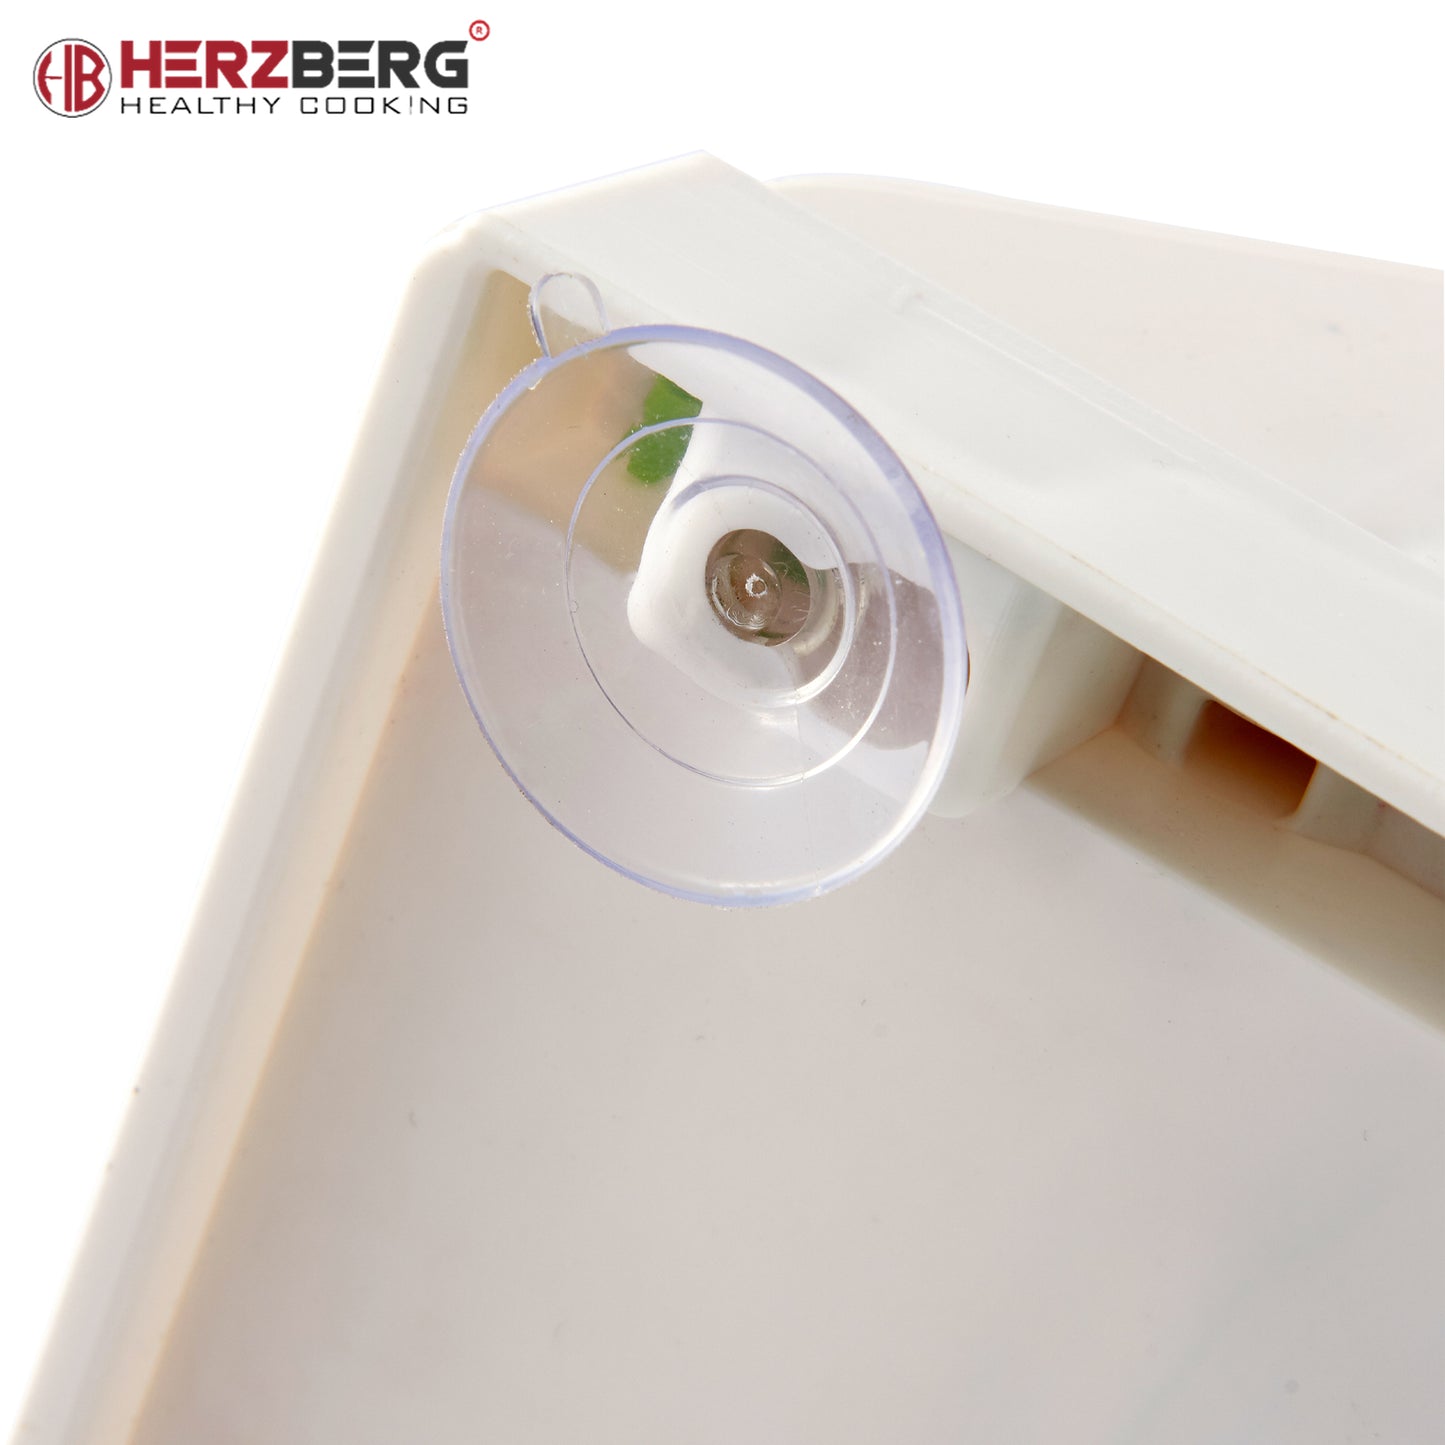 Herzberg HG-8030: Vegetable Spiralizer Set